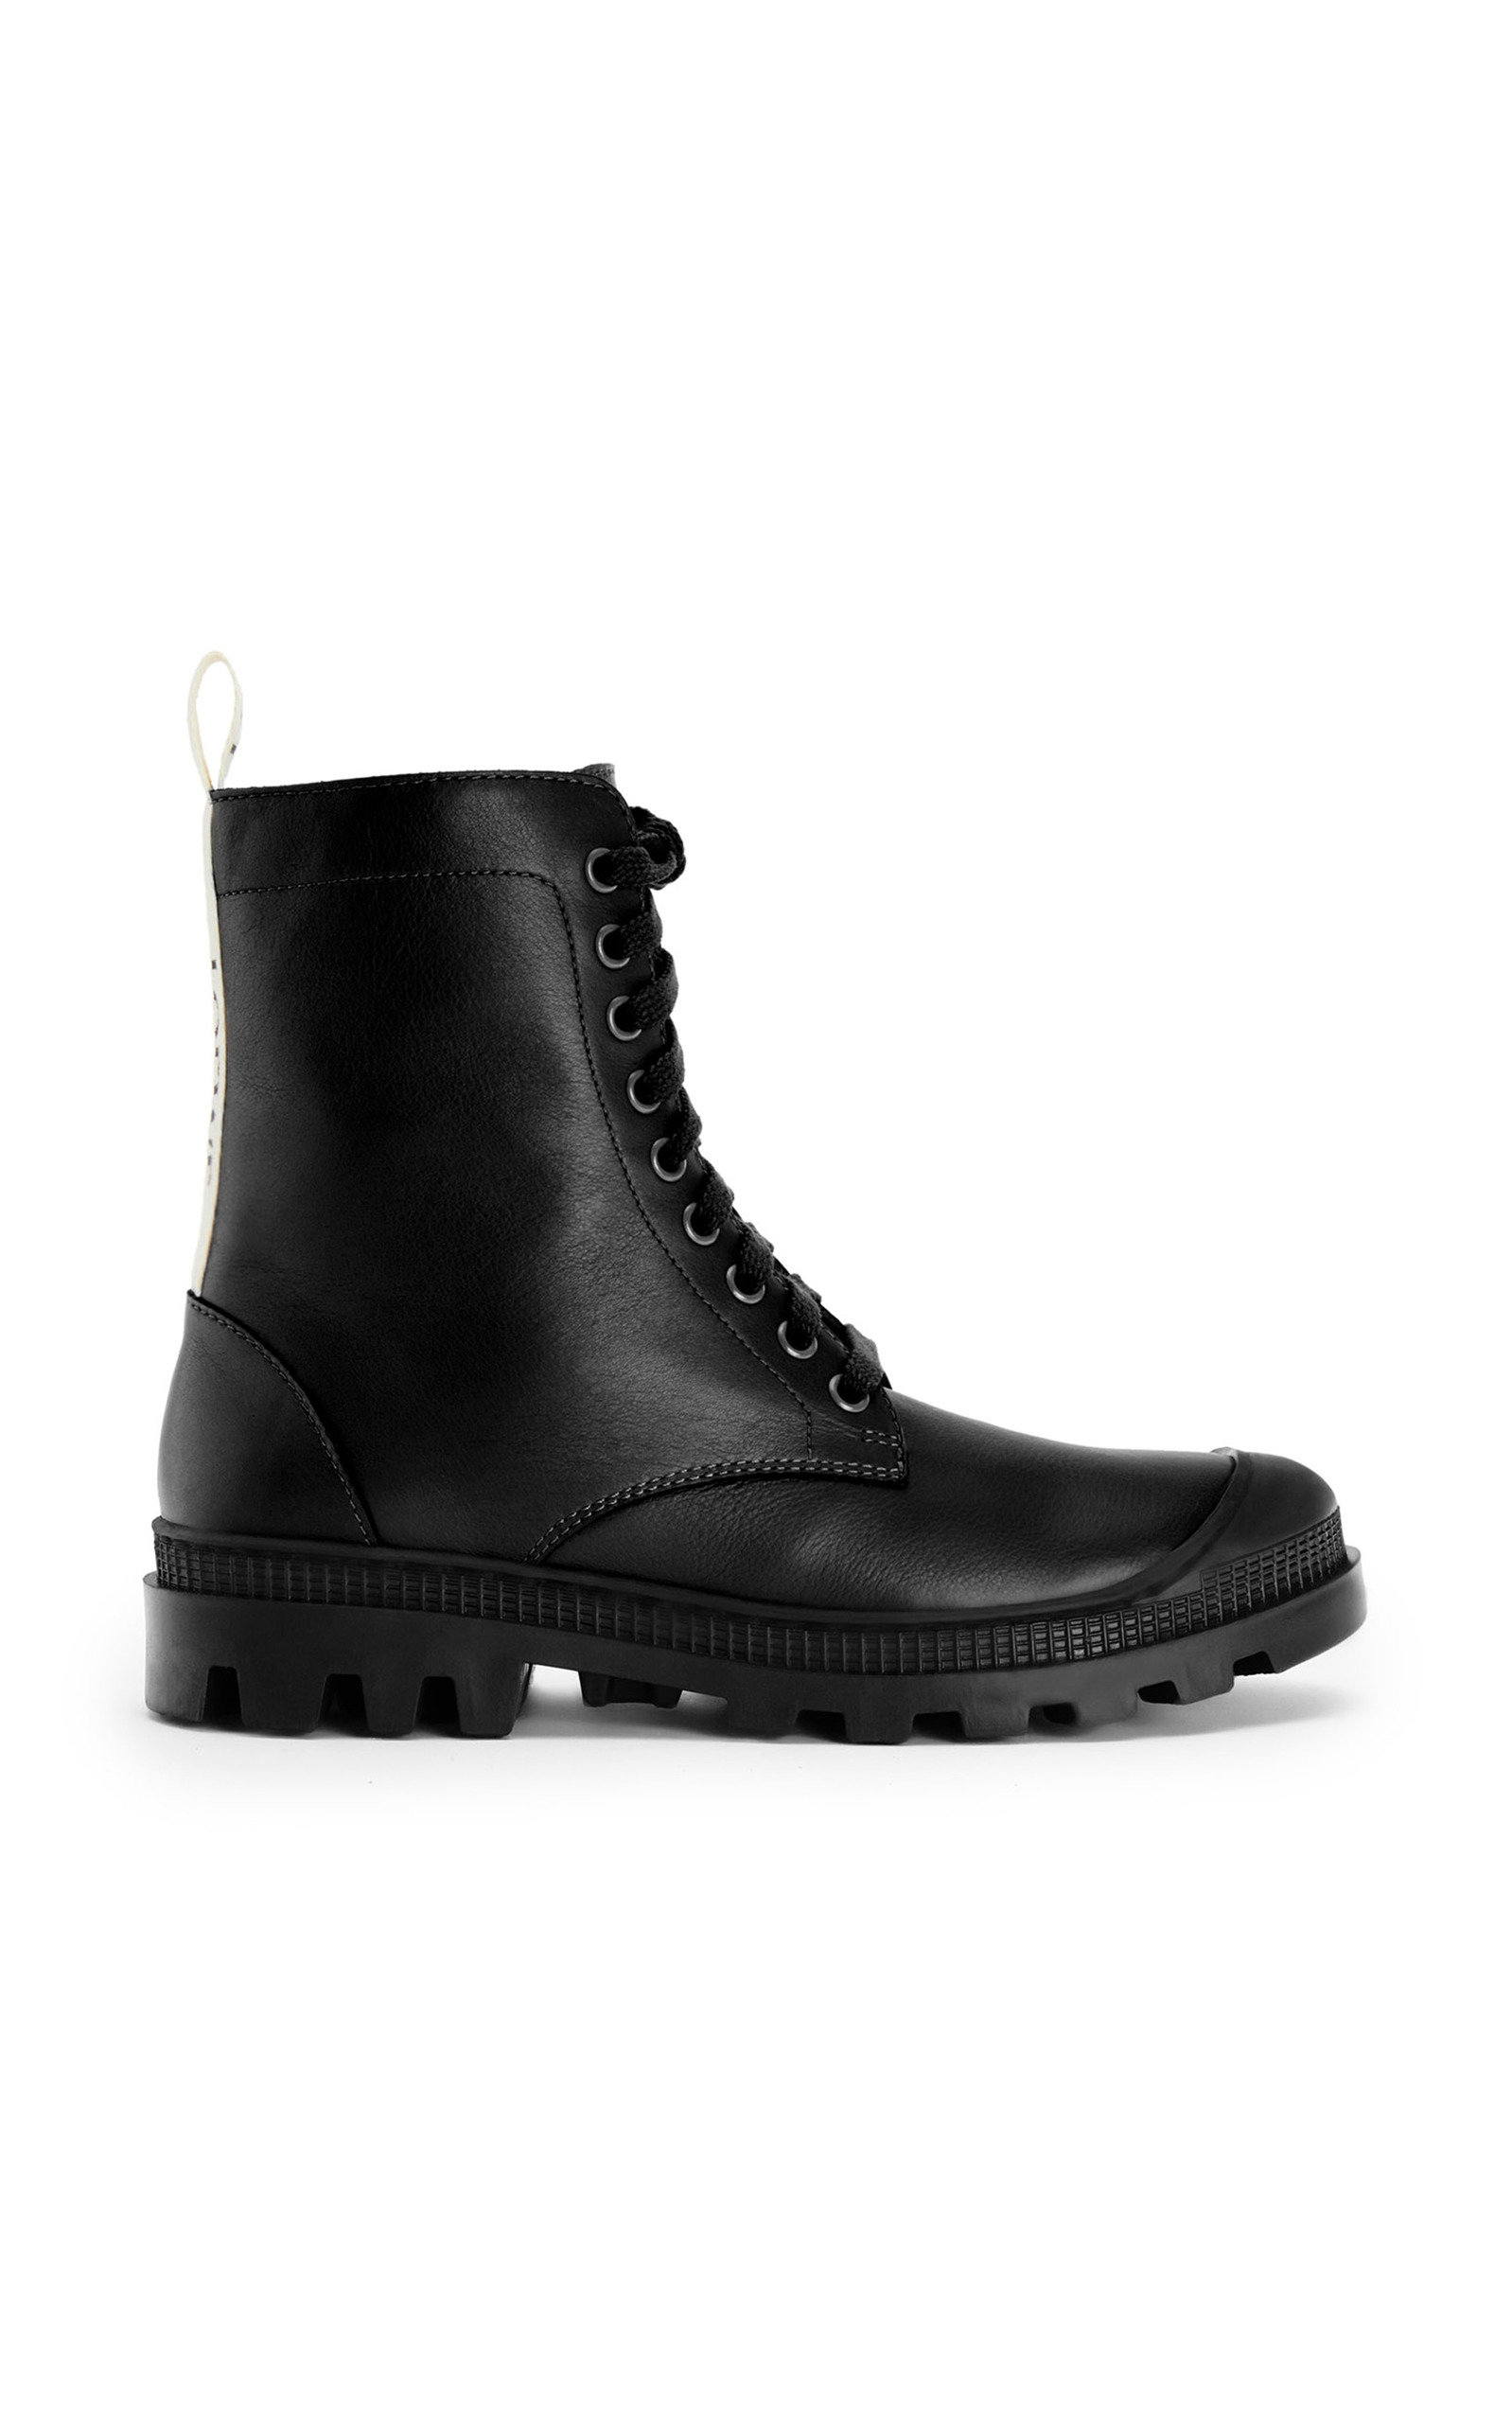 Loewe - Leather Combat Boots - Black - IT 35 - Moda Operandi